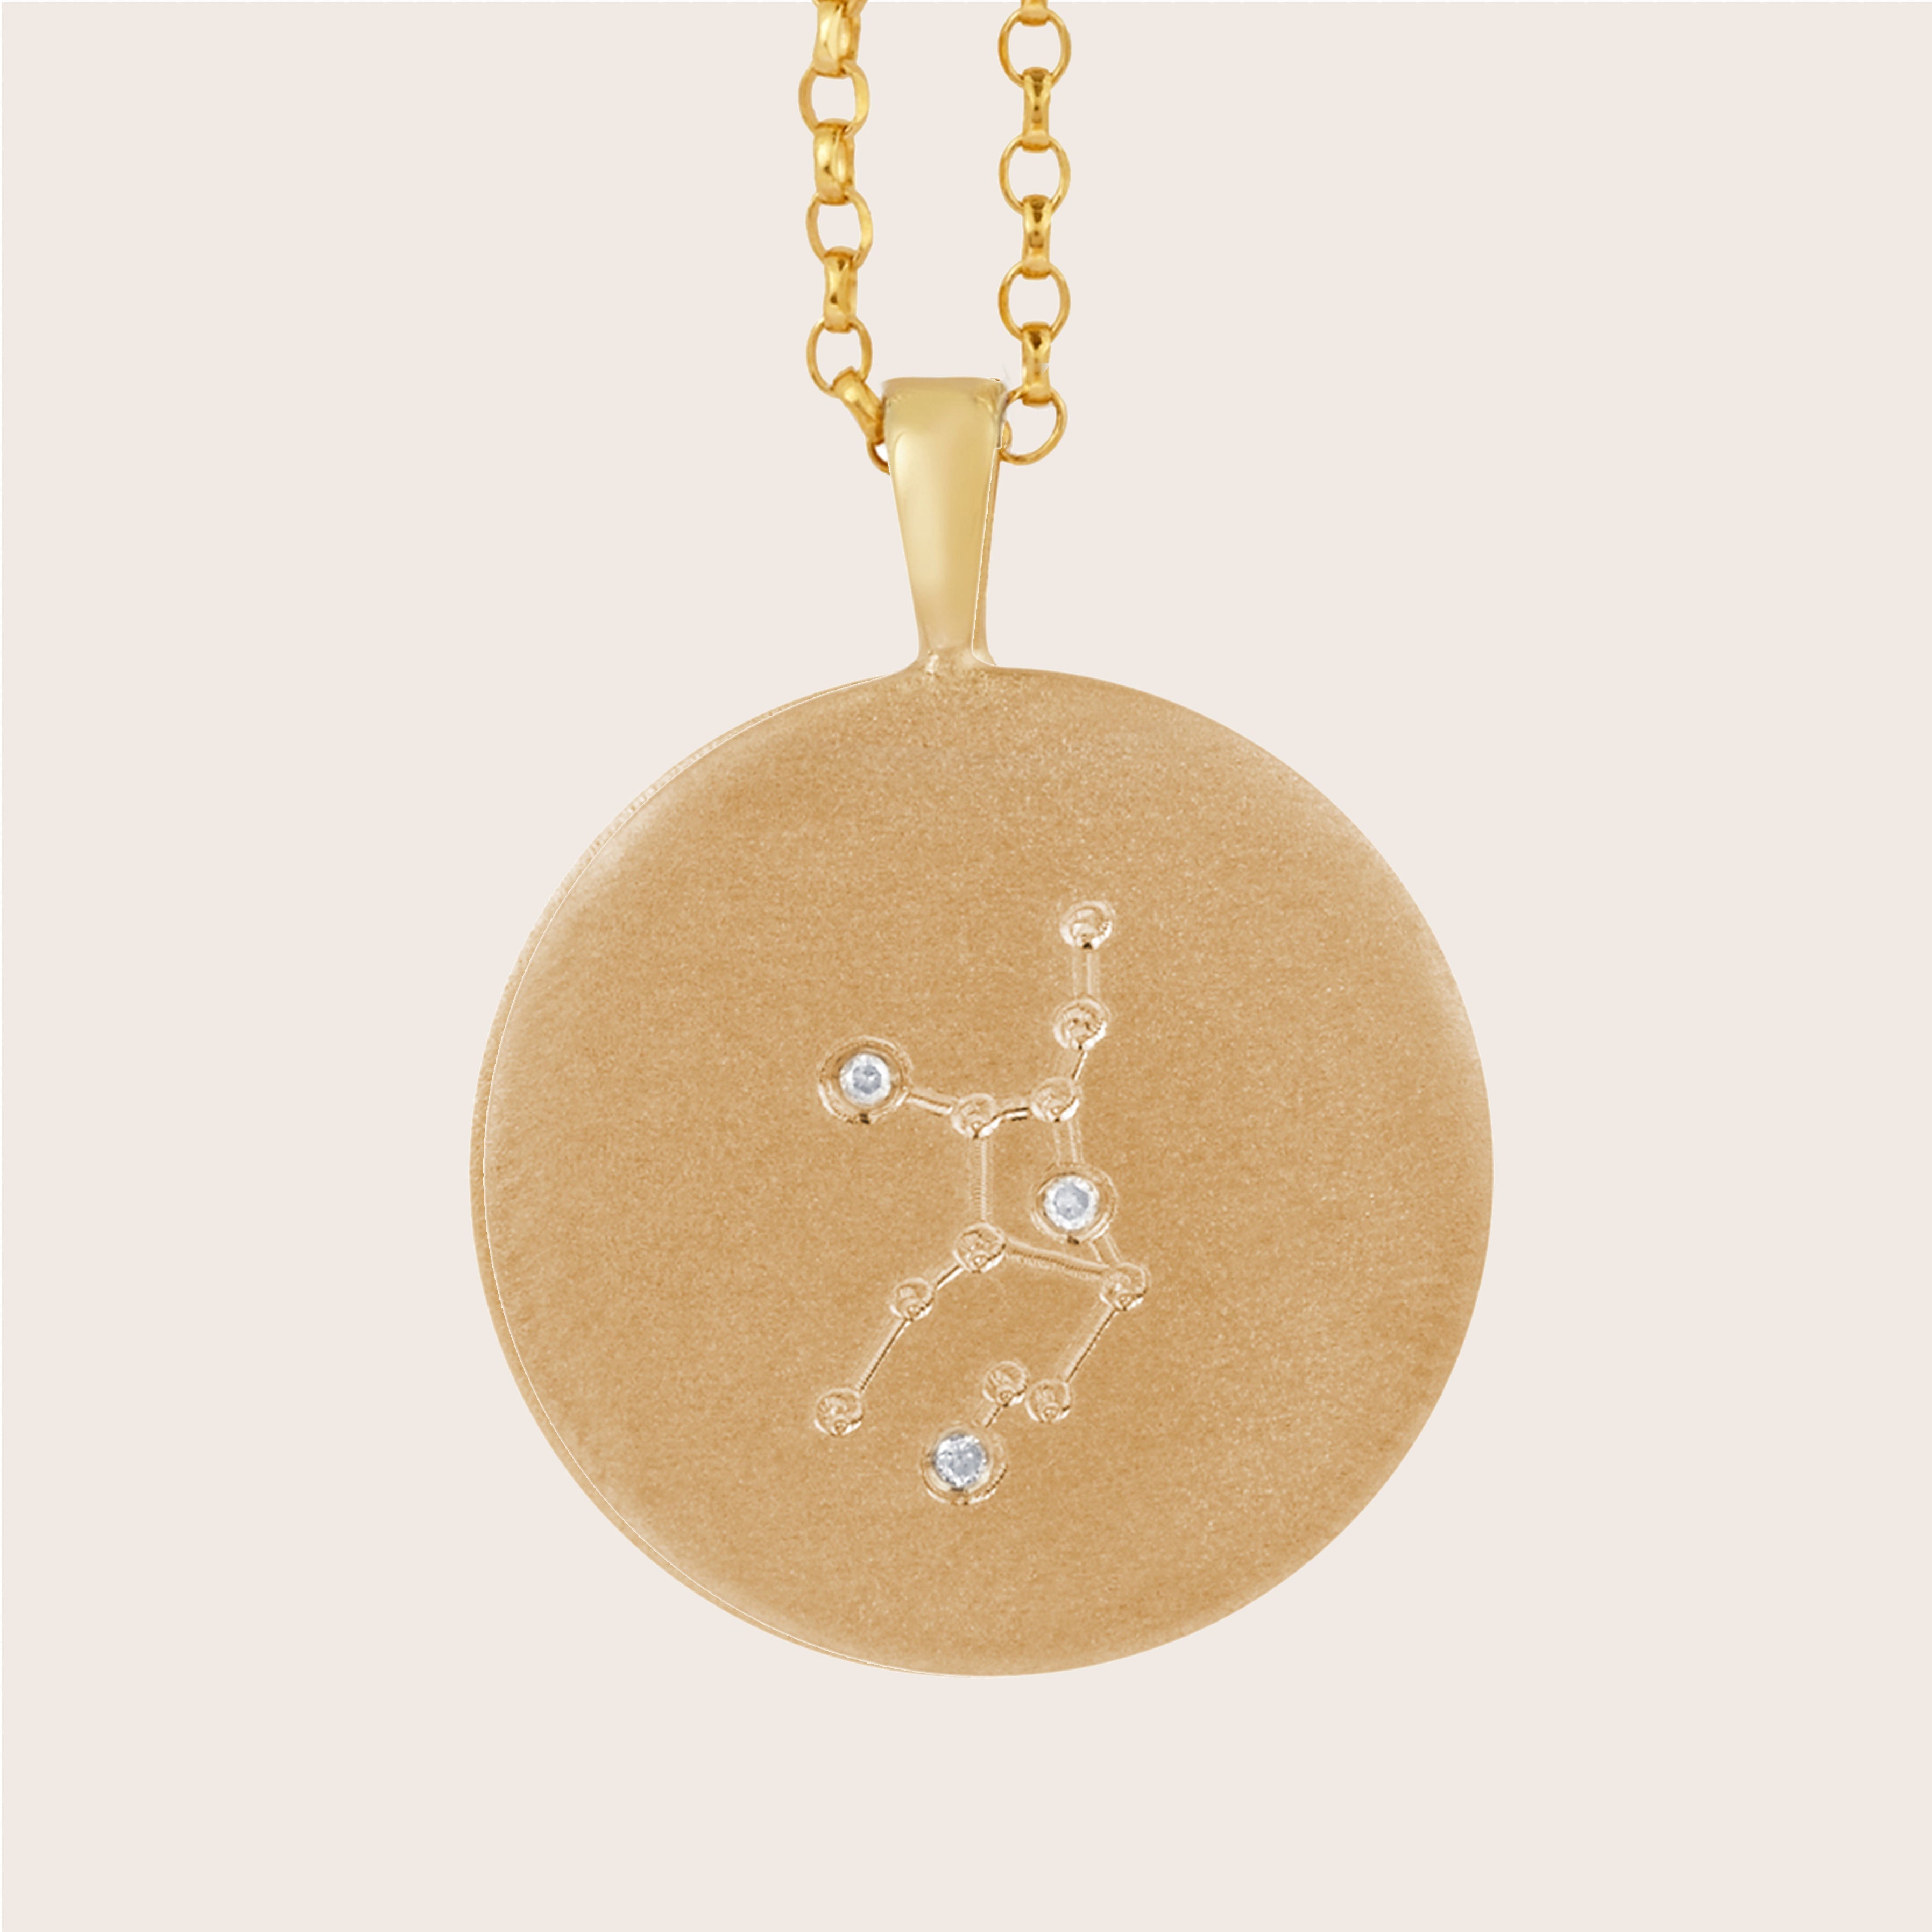 Virgo Constellation Diamond Necklace - Rock the Jumpsuit